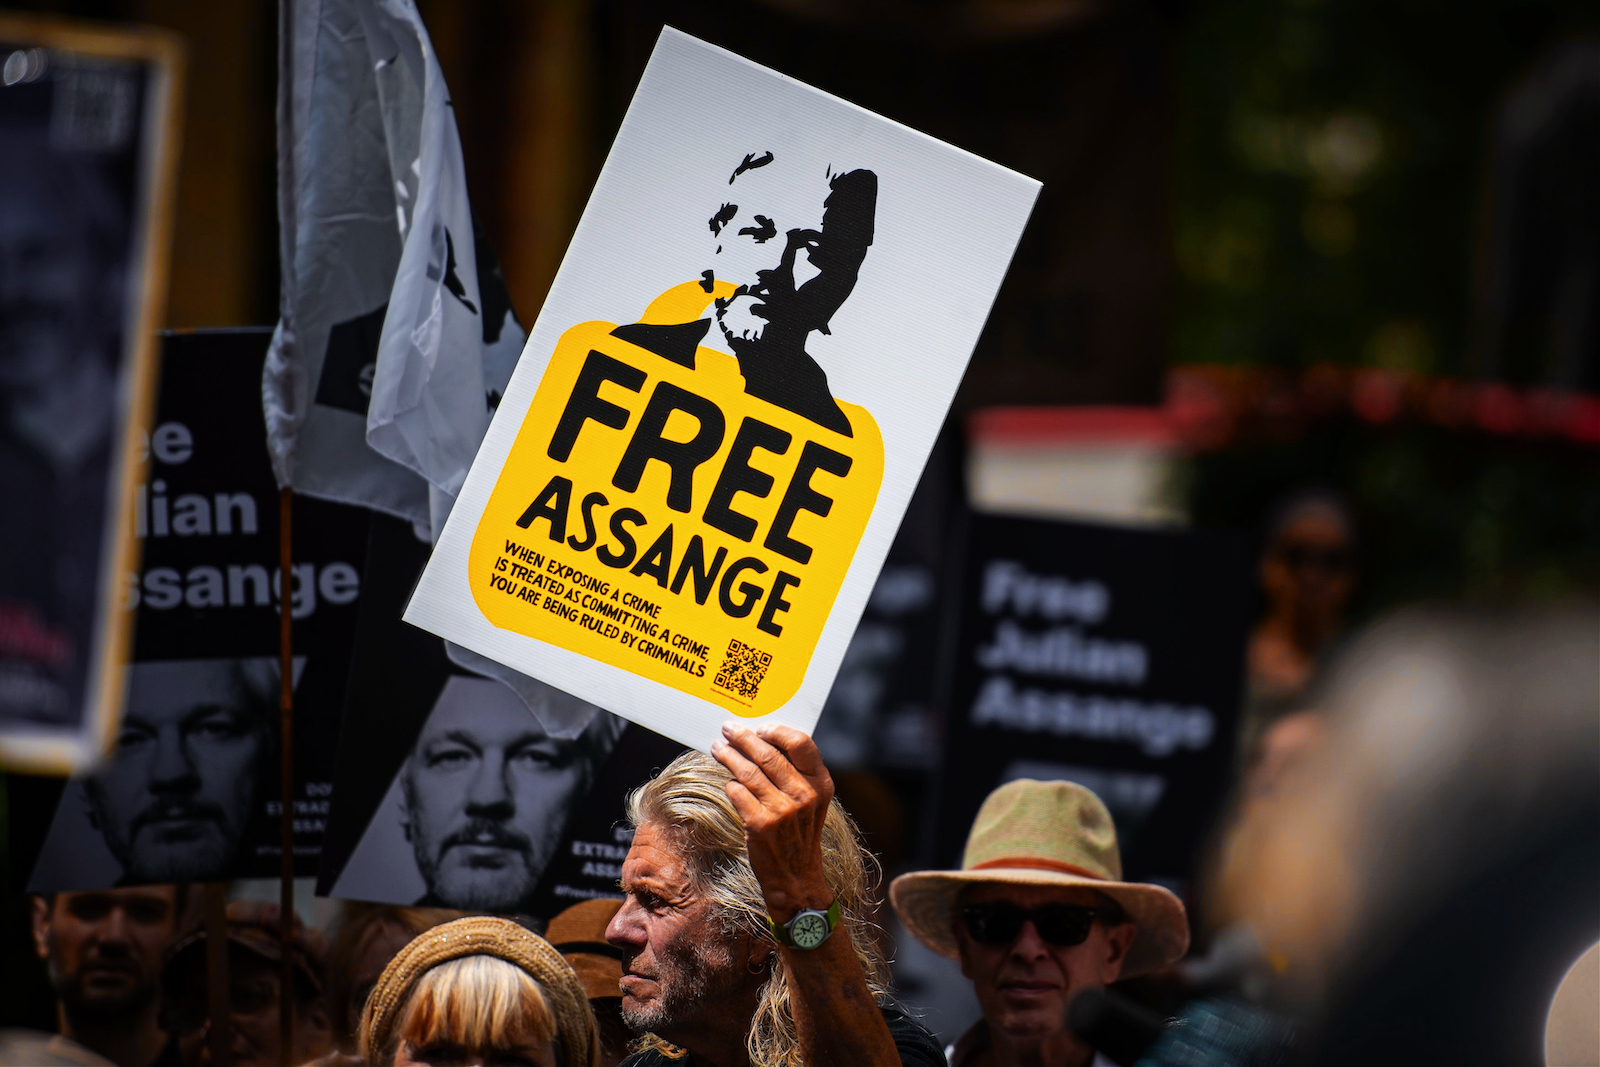 Free Julian Assange rally